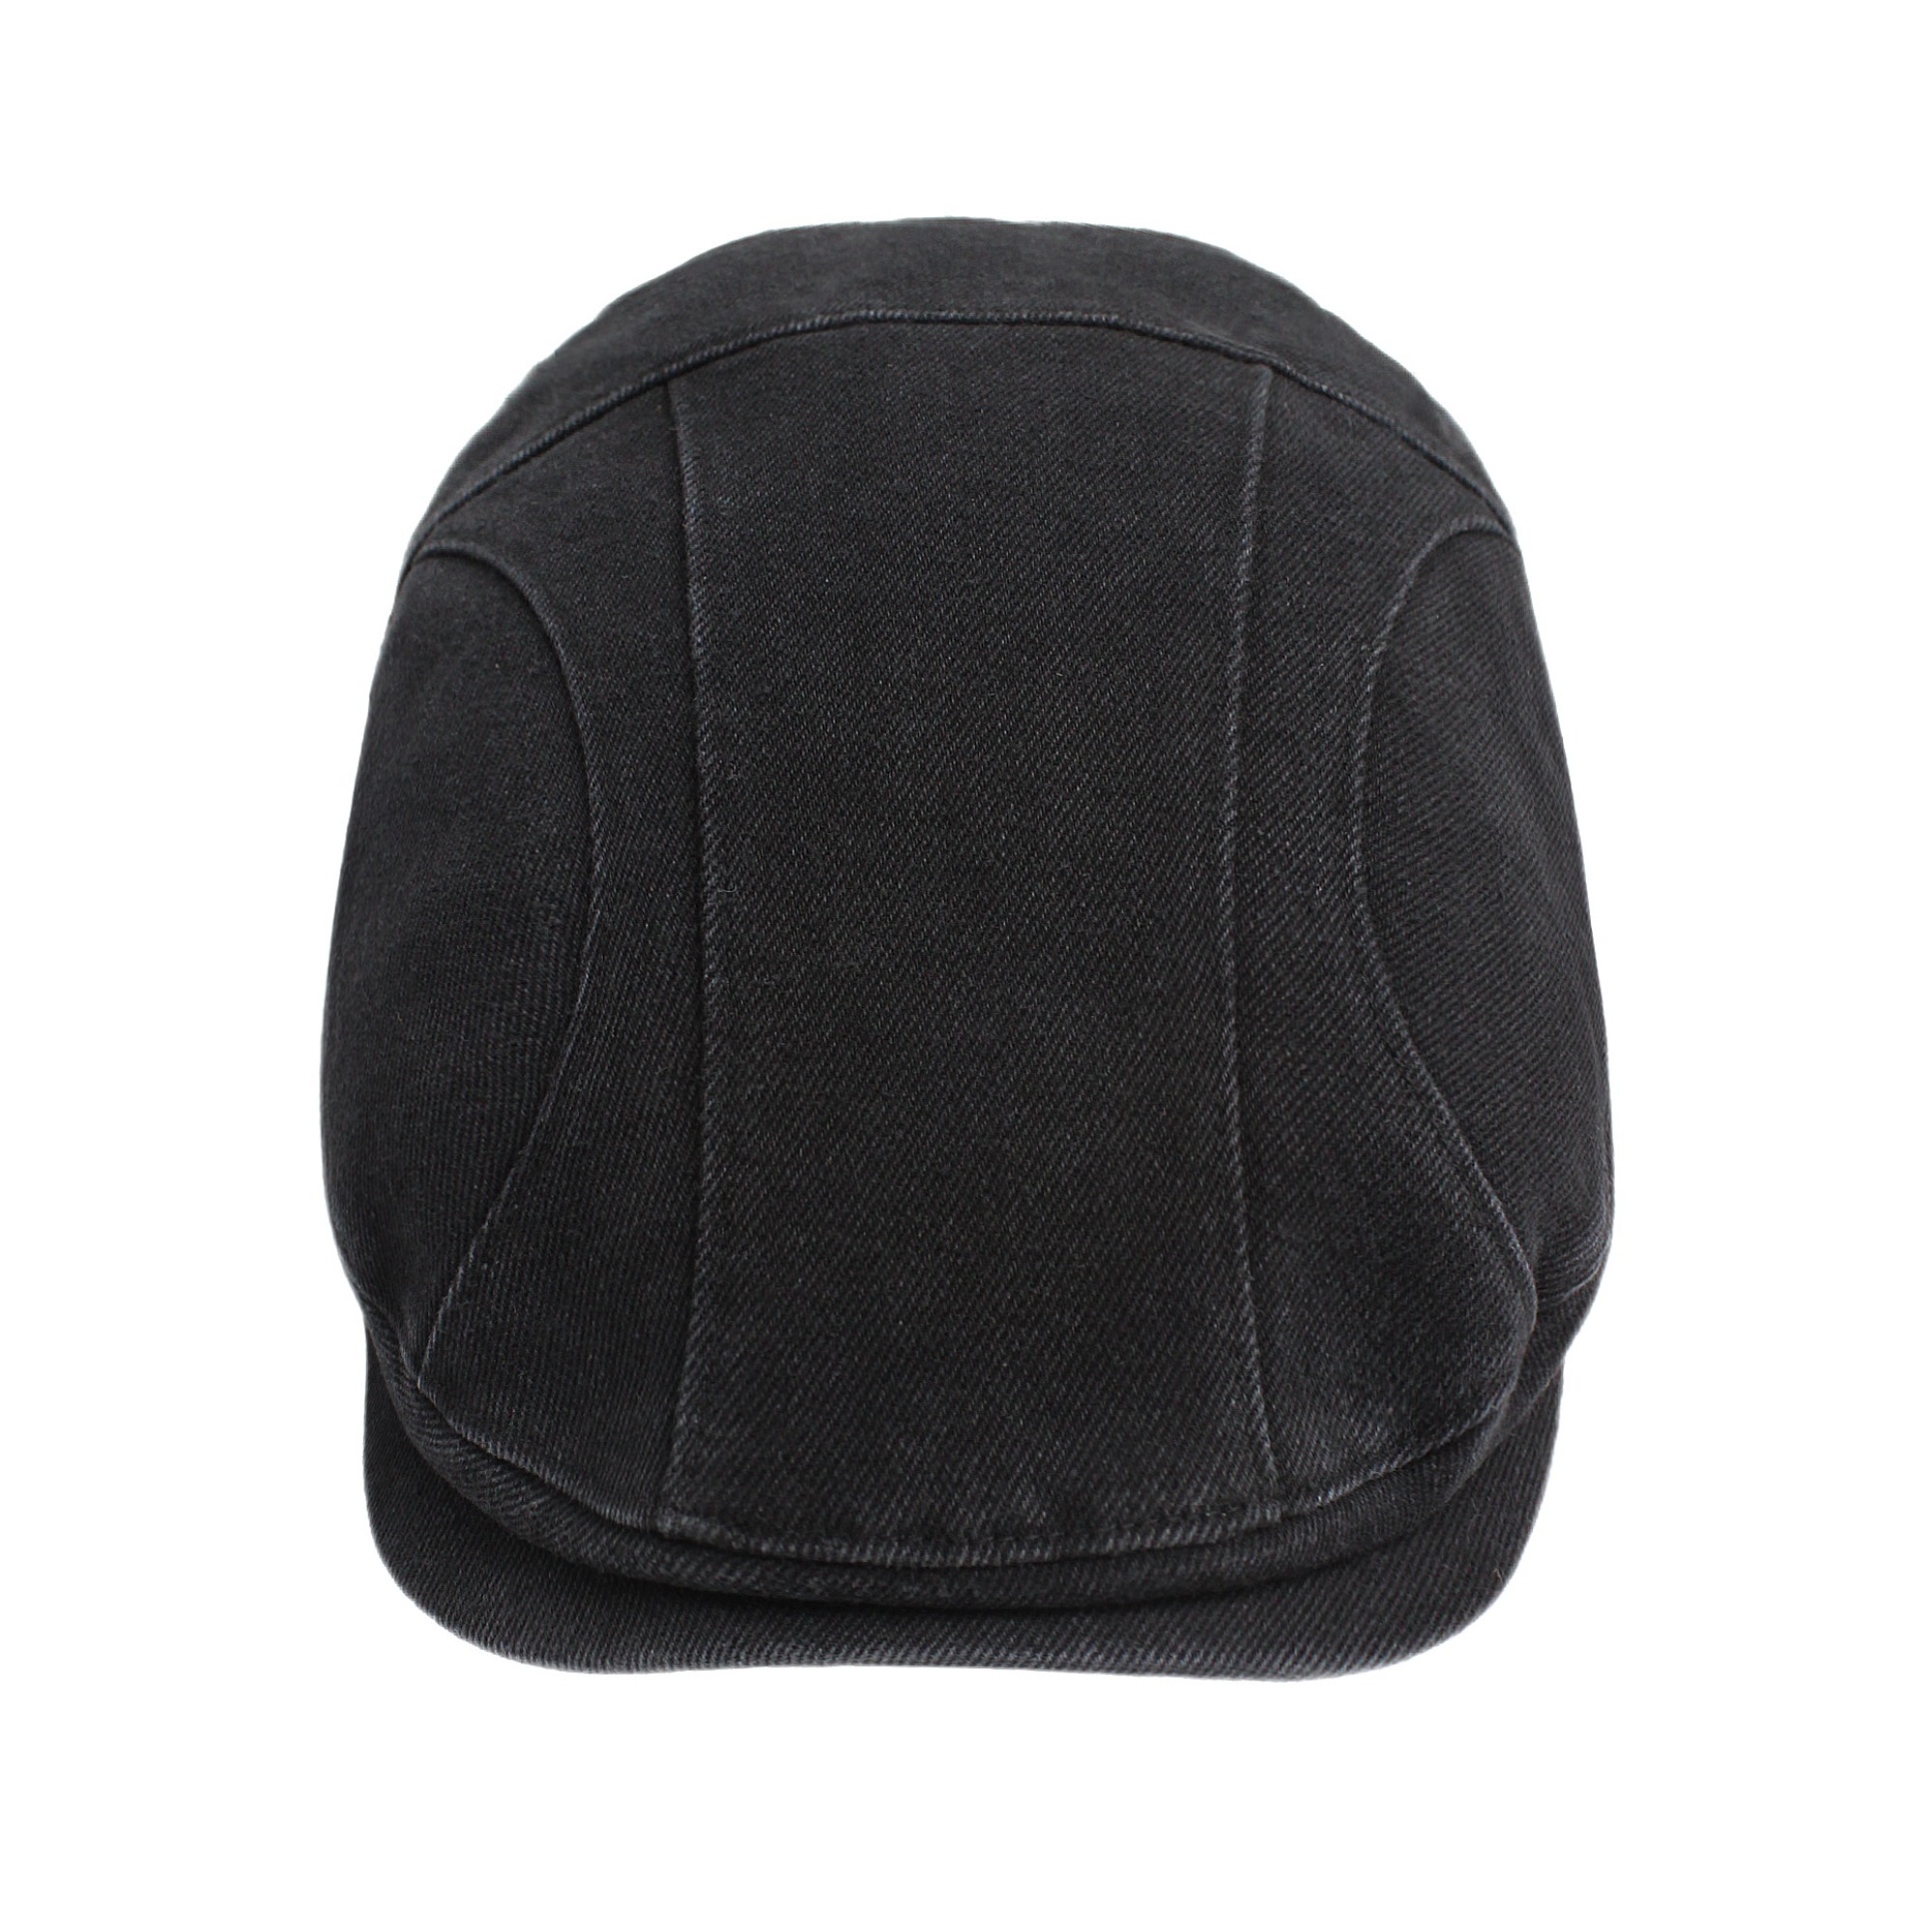 Hunting cap (Black) ⠀⠀⠀⠀⠀⠀⠀⠀⠀⠀⠀ 2월 27일 이후 순차발송